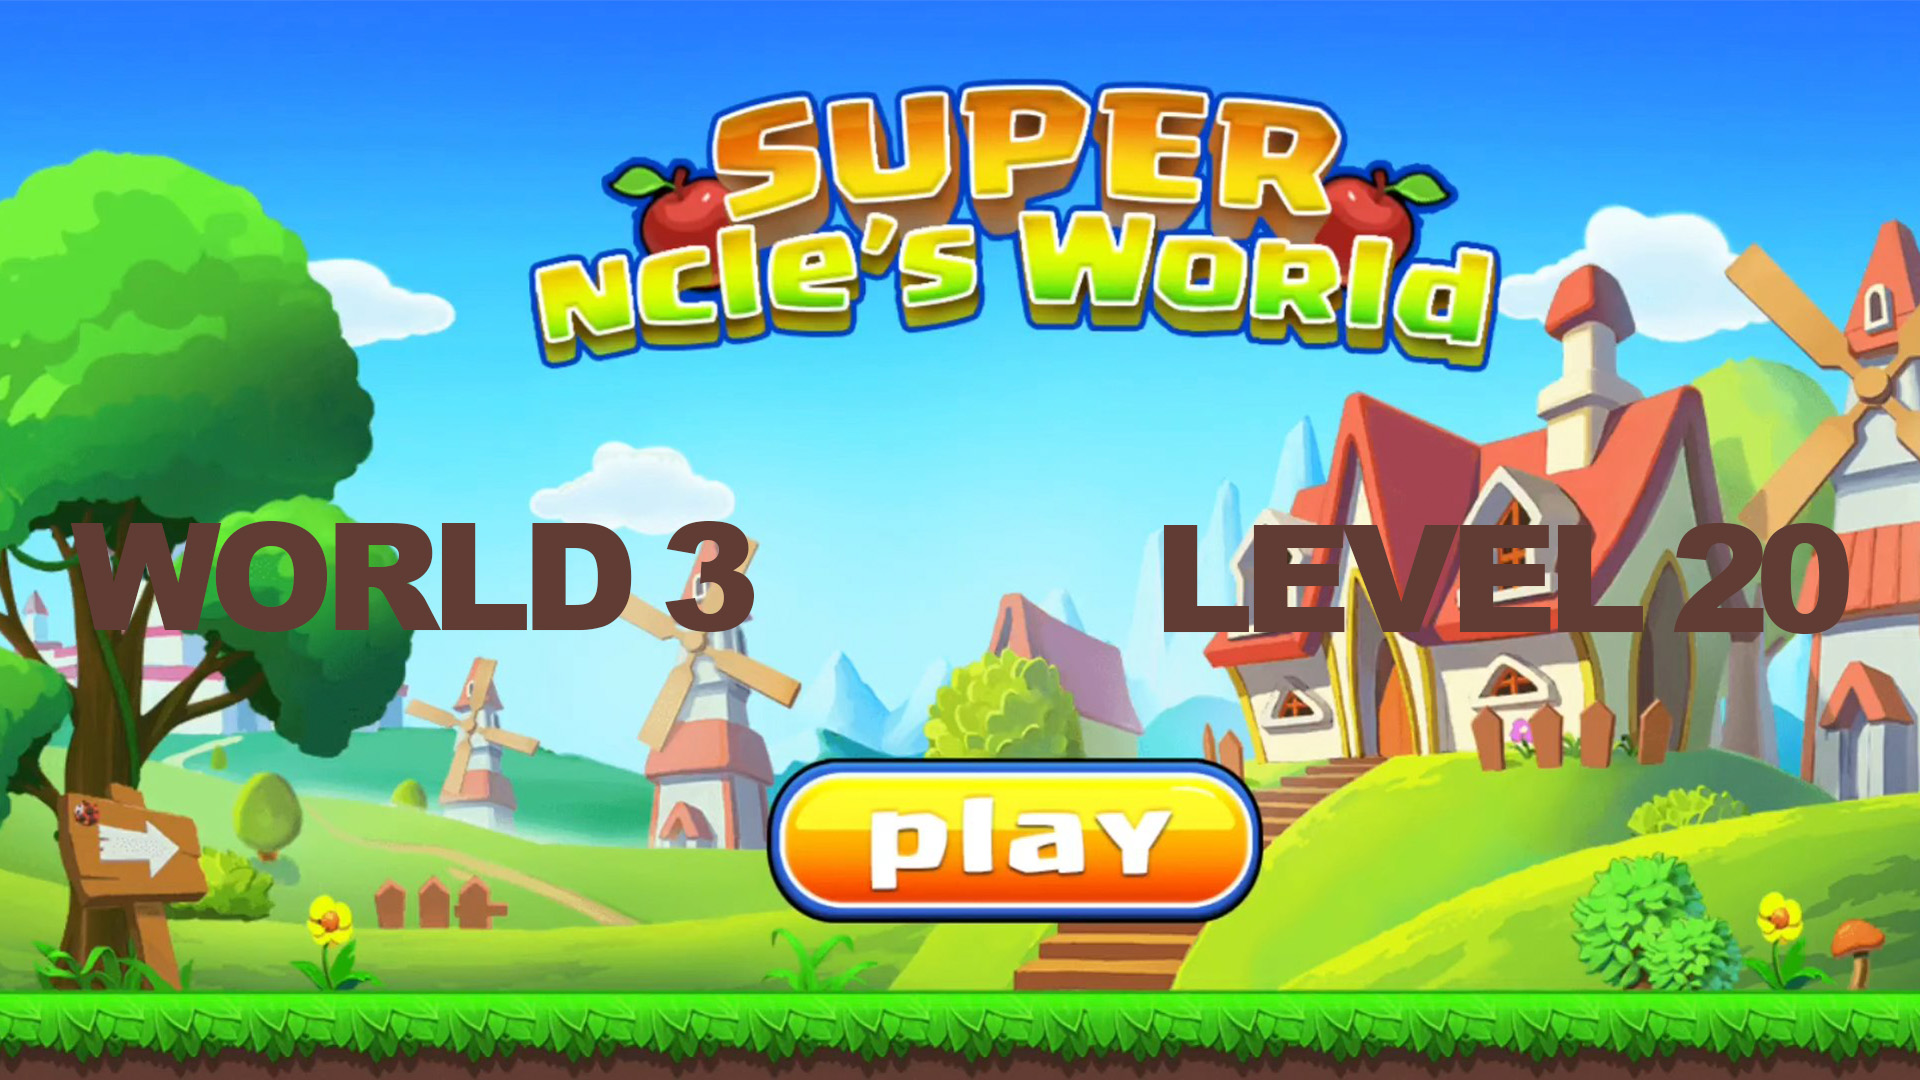 Super ncle's  World 3. Level 20.